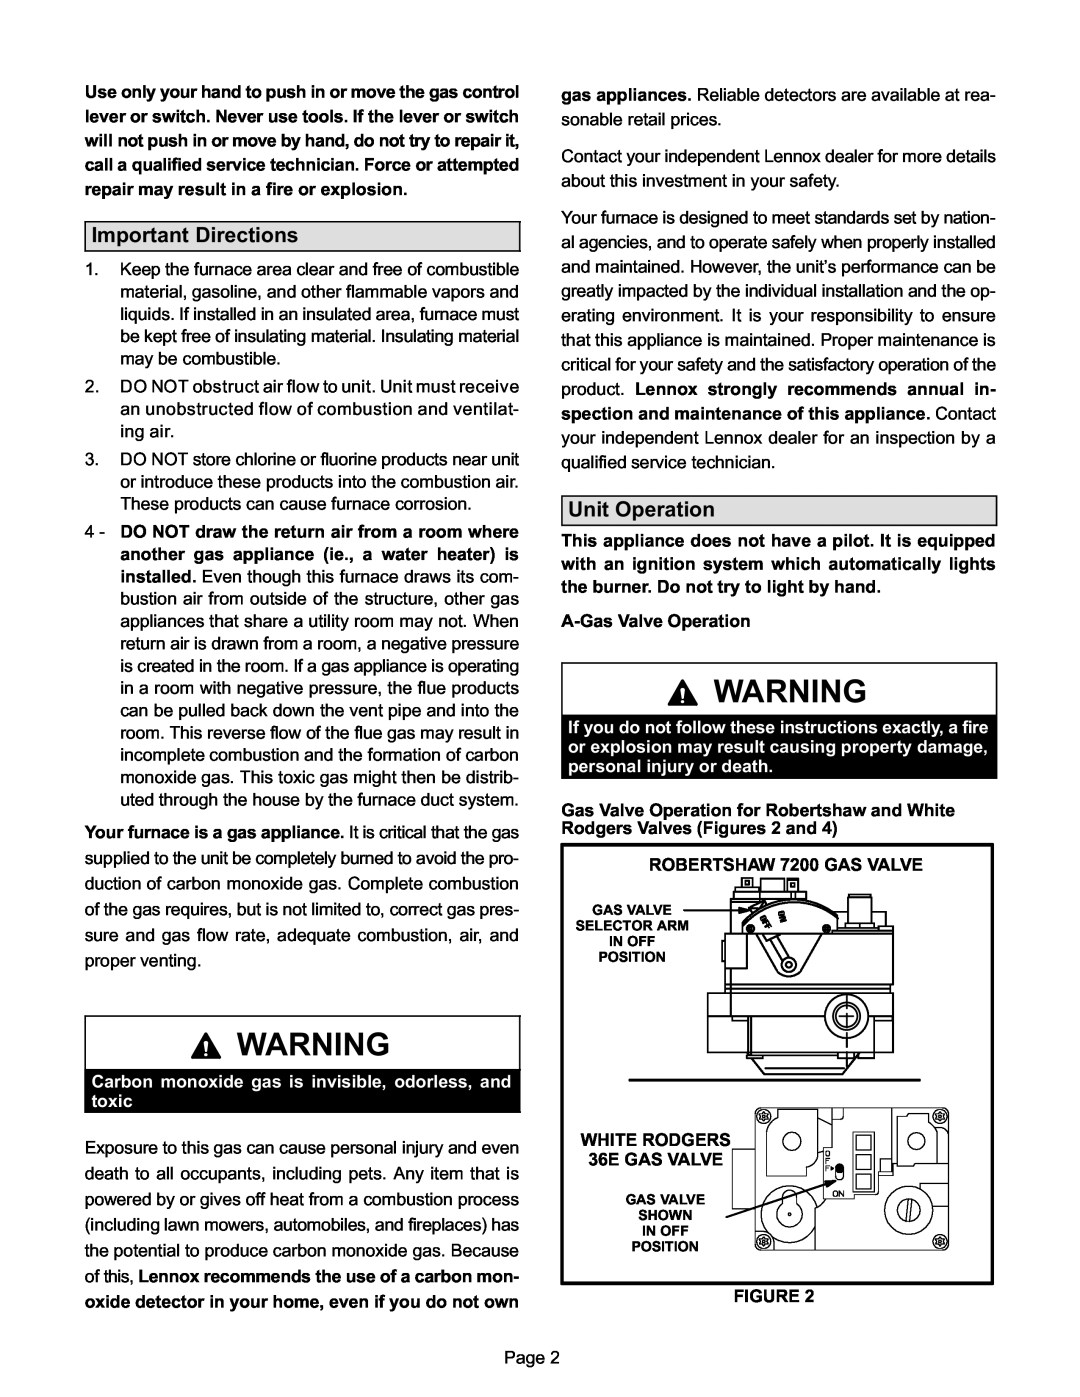 Lennox International Inc G21 V SERIES, G21Q manual Important Directions, Unit Operation 